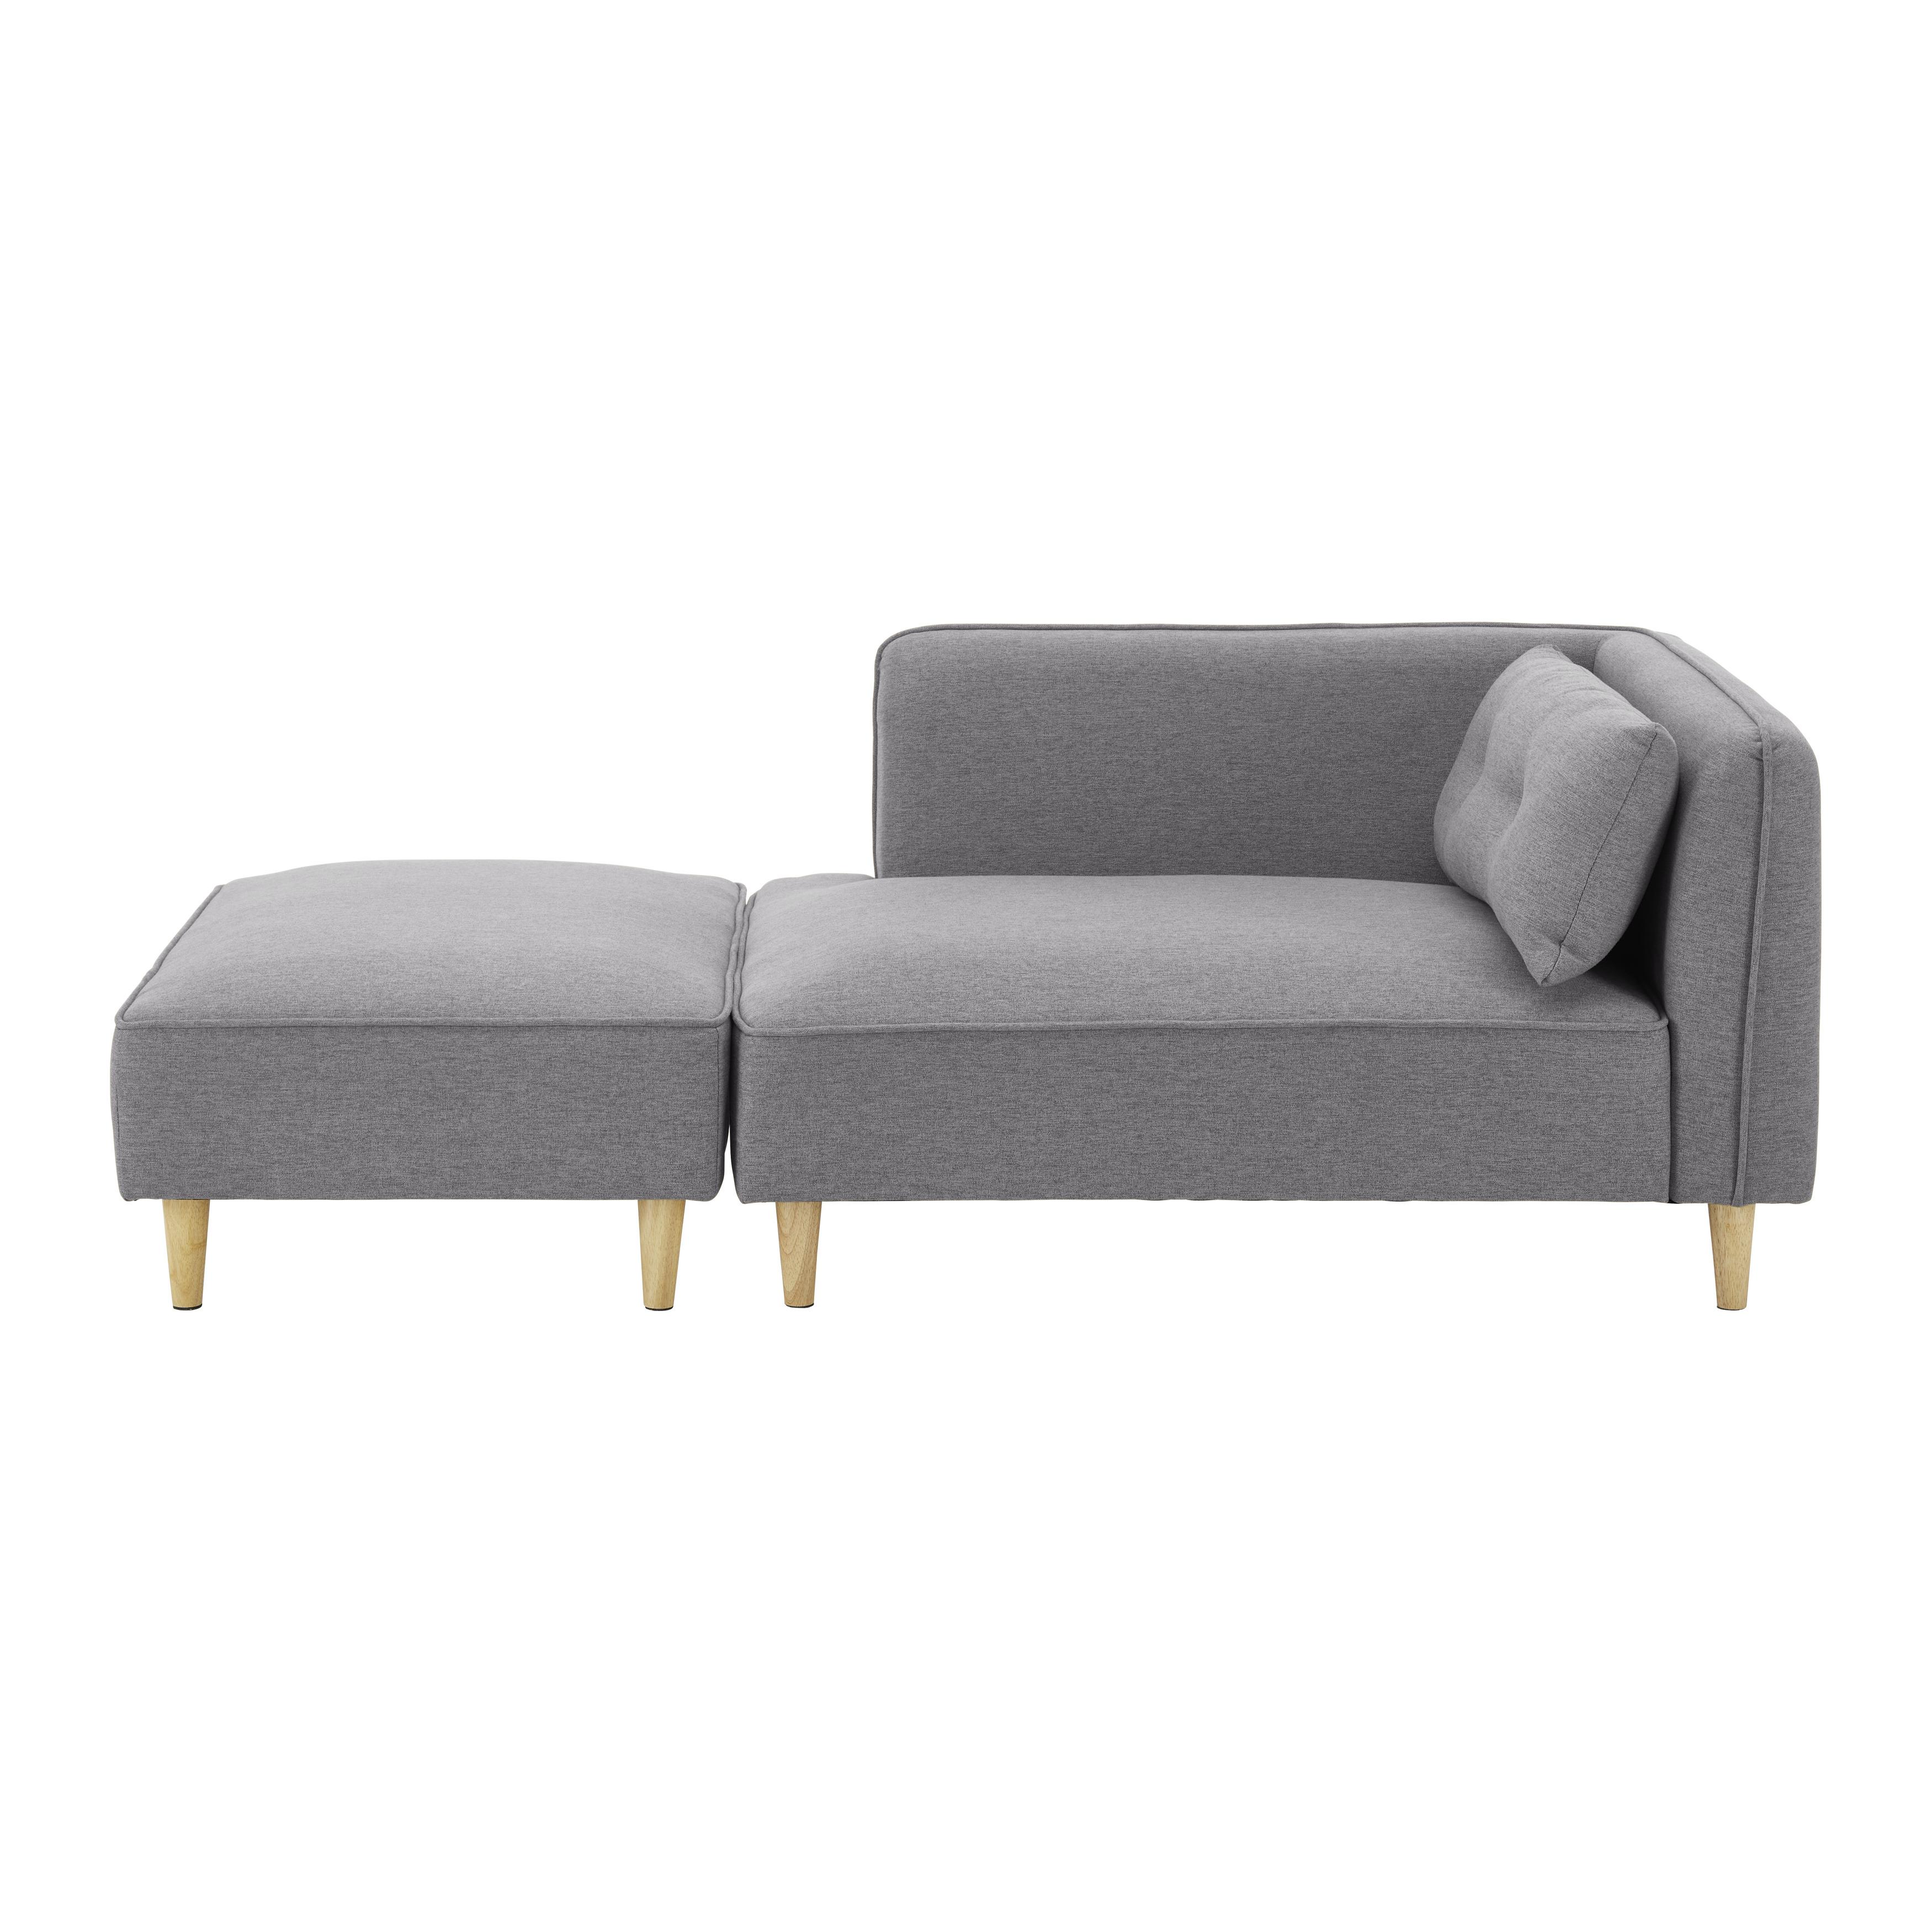 Modulares Sofa "Fanny" mit Hocker, dunkelgrau - Dunkelgrau/Naturfarben, MODERN, Holz/Textil (154/55/73cm) - Bessagi Home